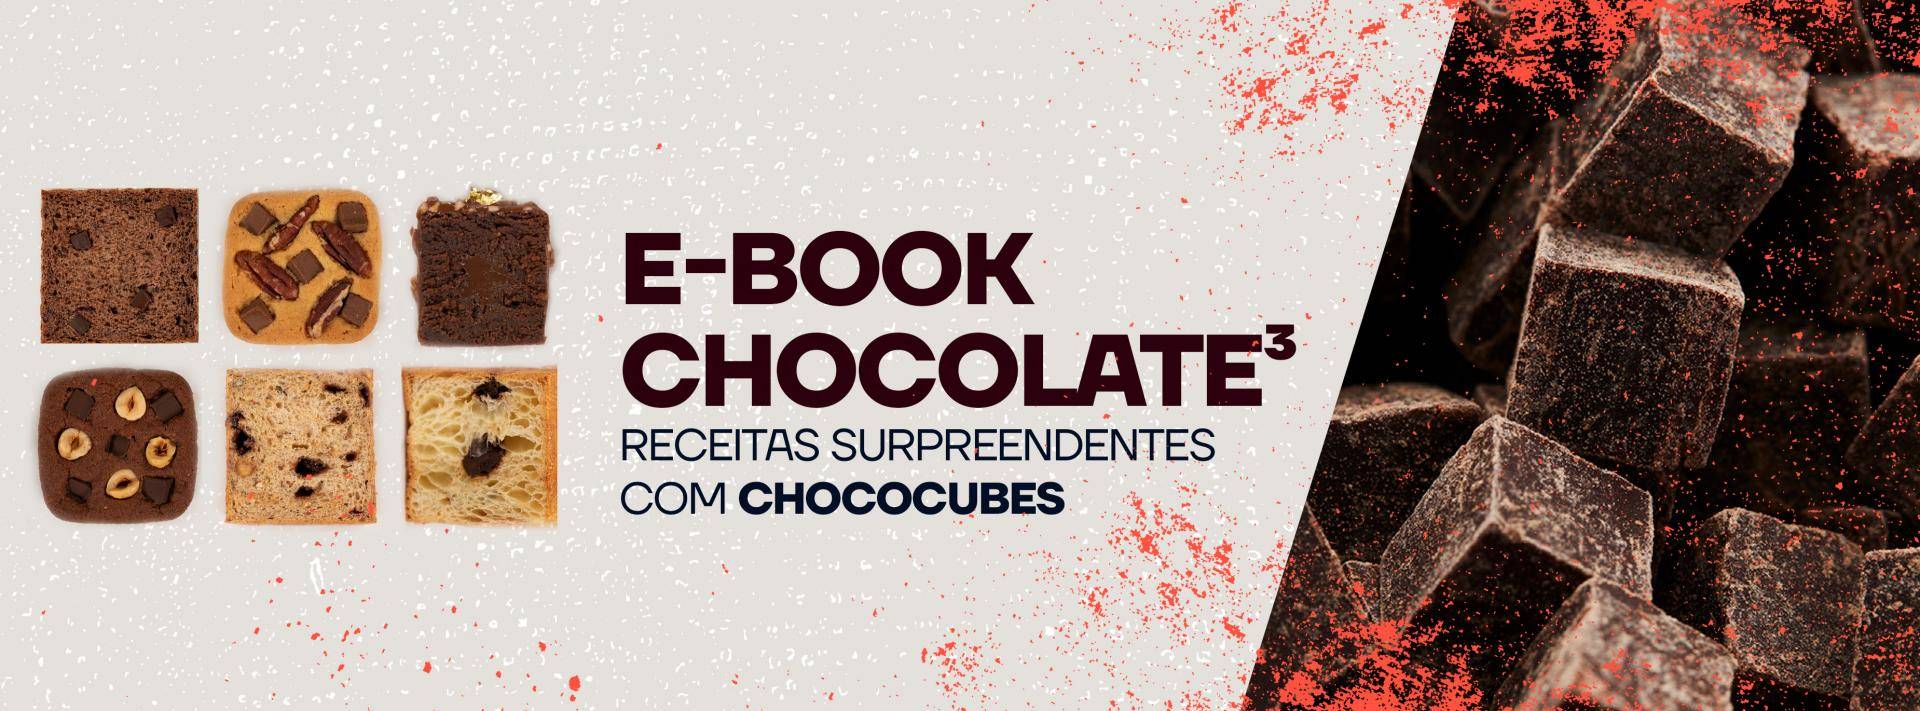 E-book CHOCOLATE³